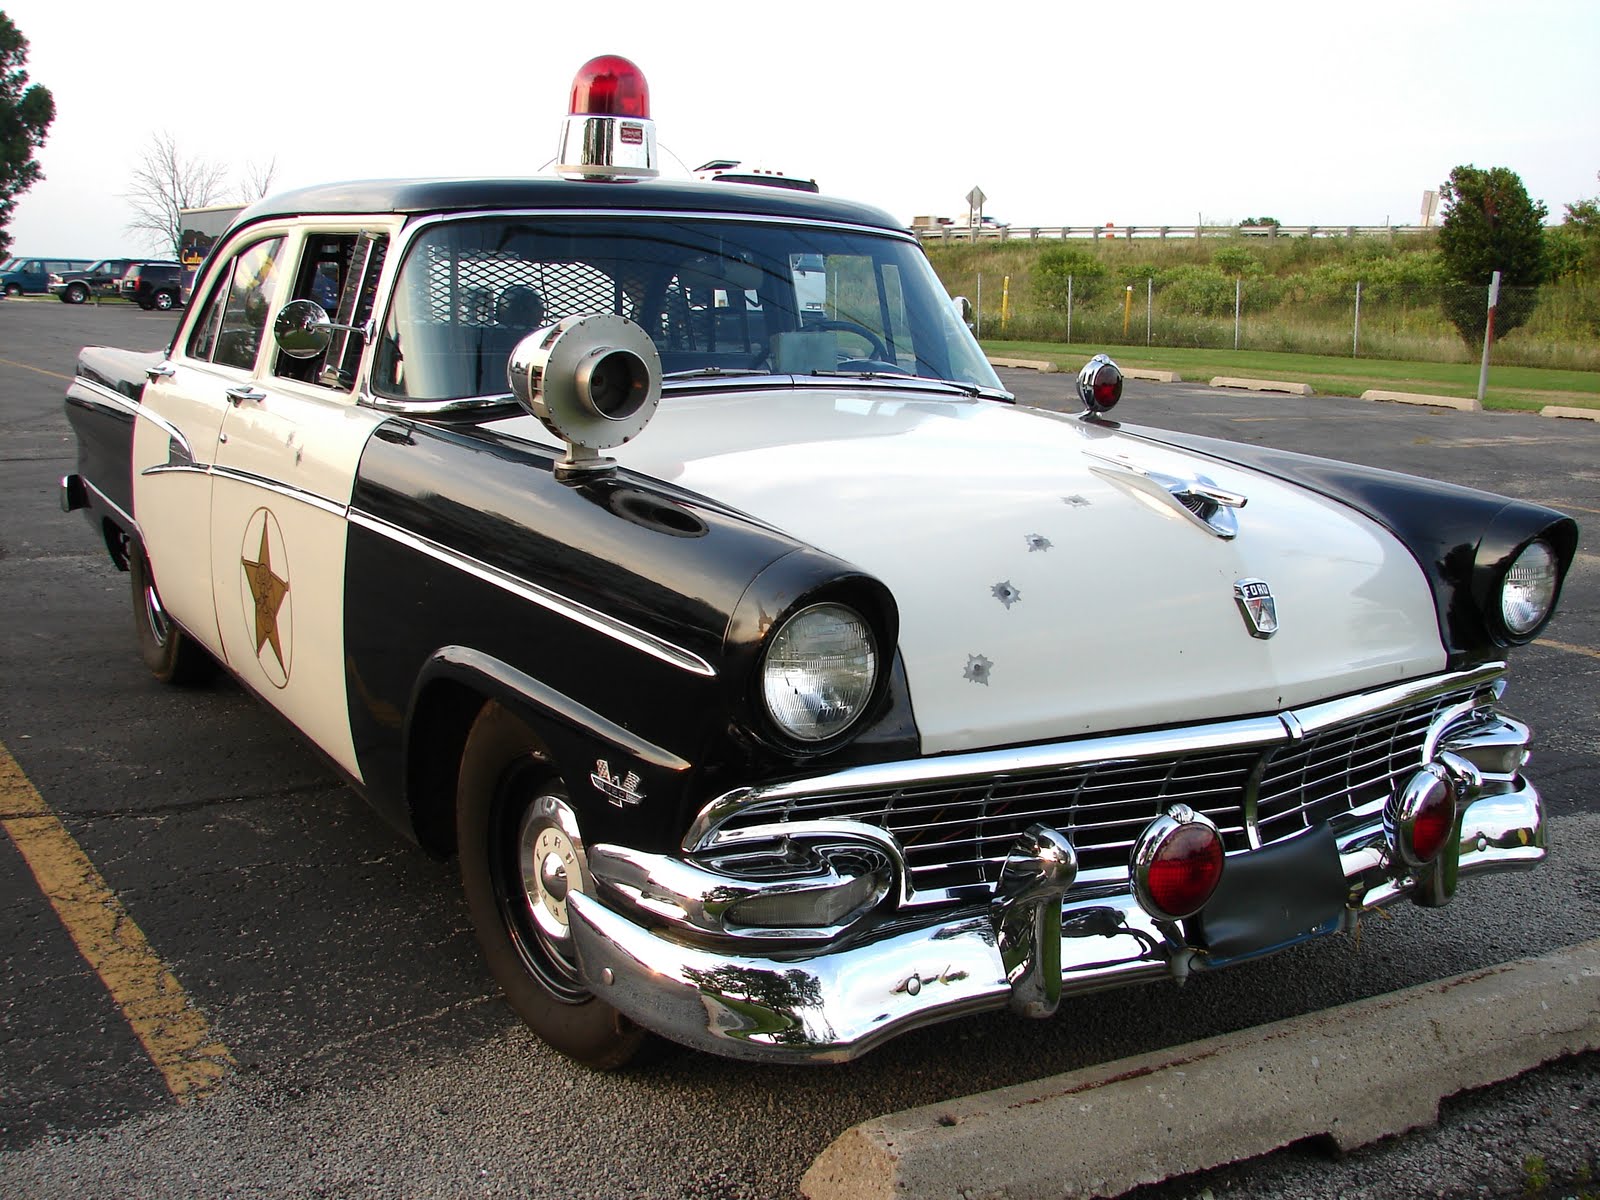 vintage police cars |vintage cars